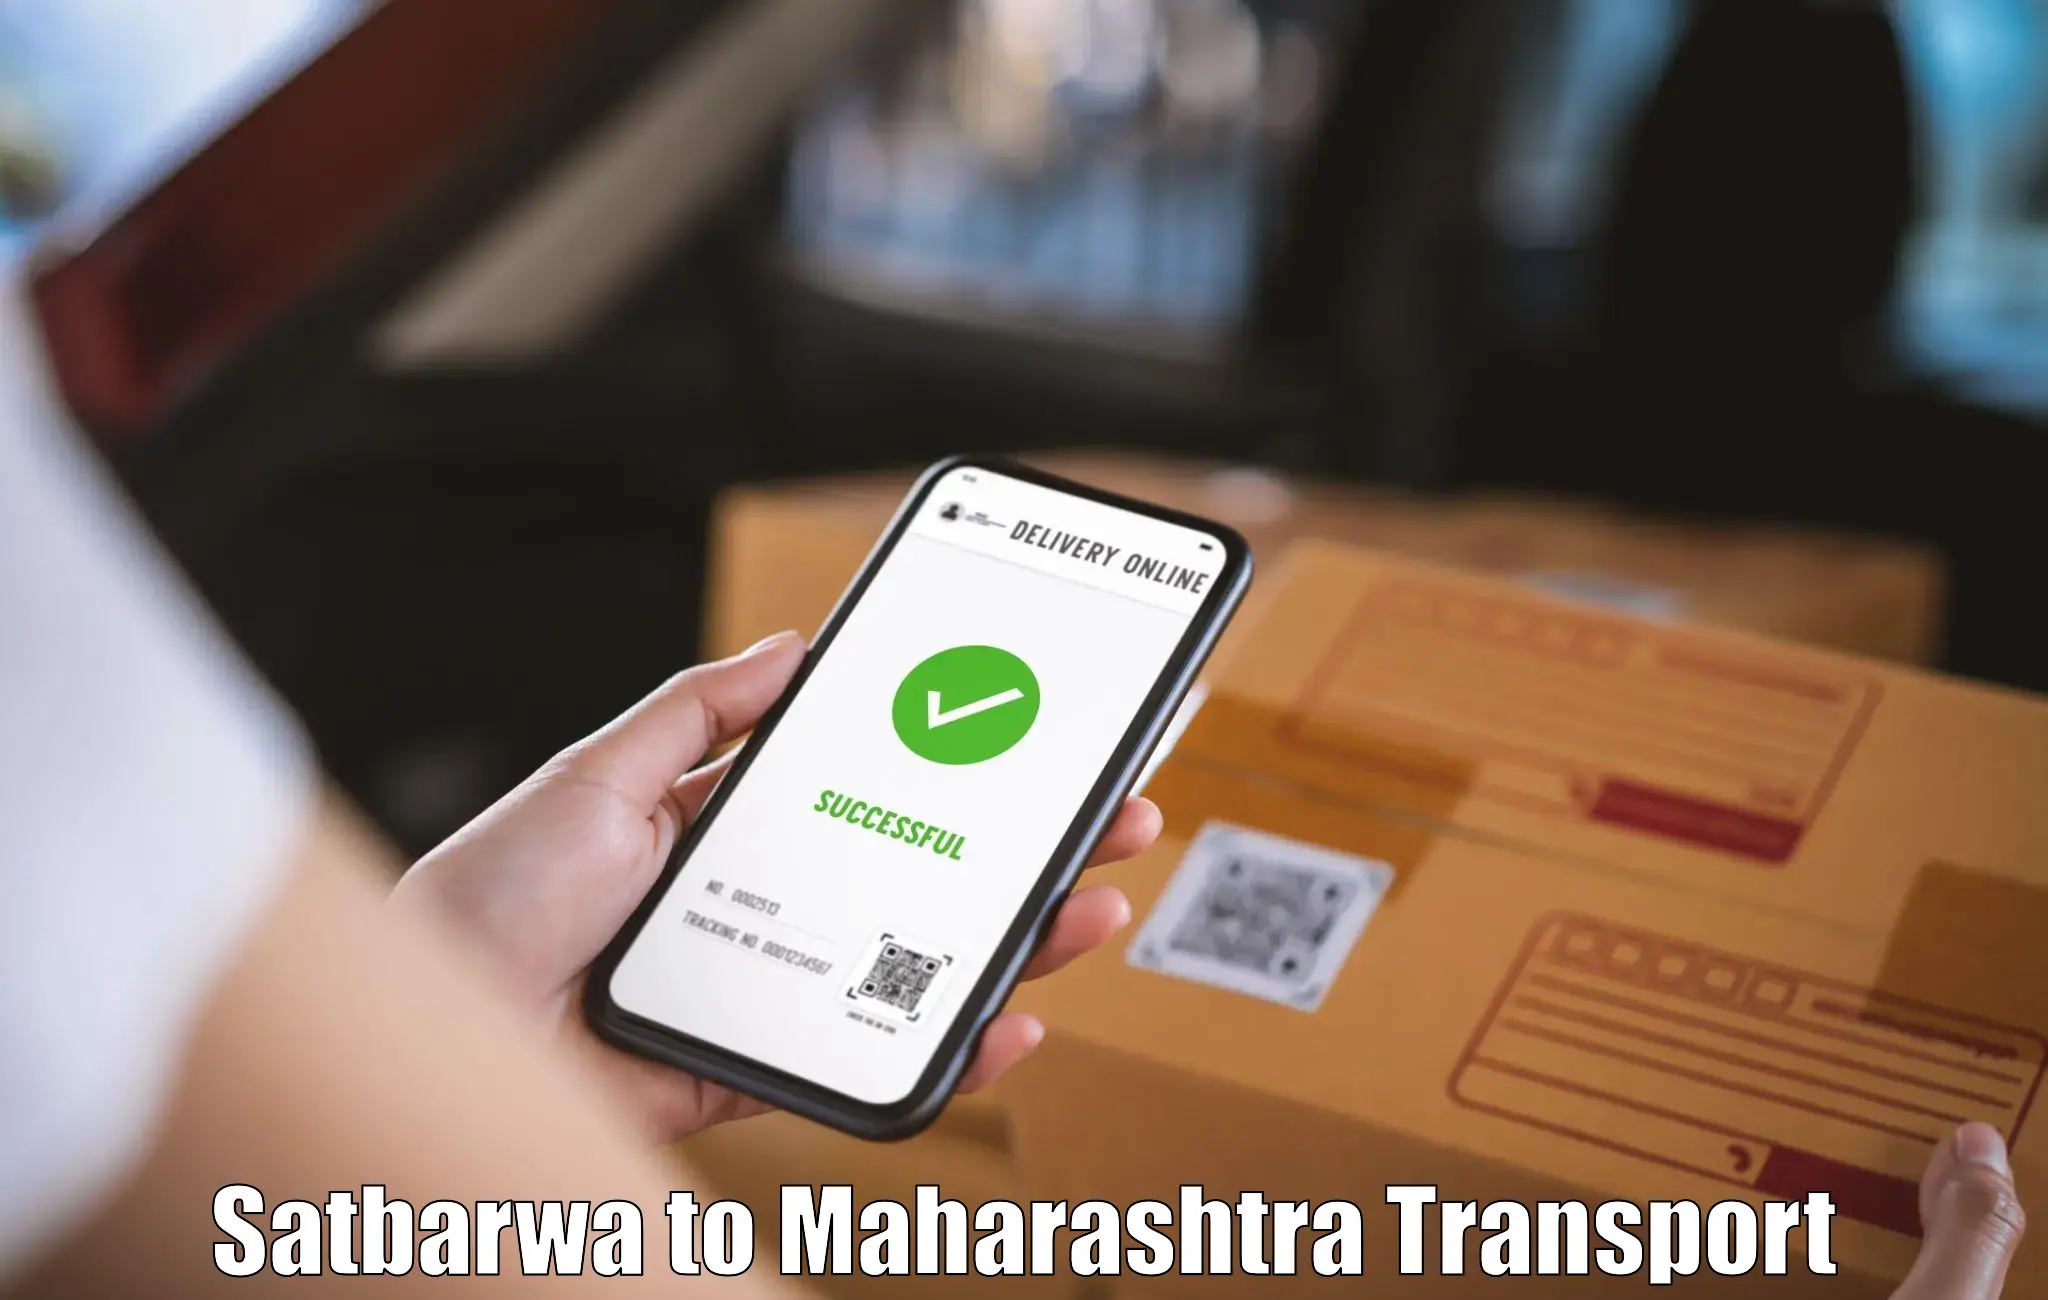 Truck transport companies in India Satbarwa to Raigarh Maharashtra